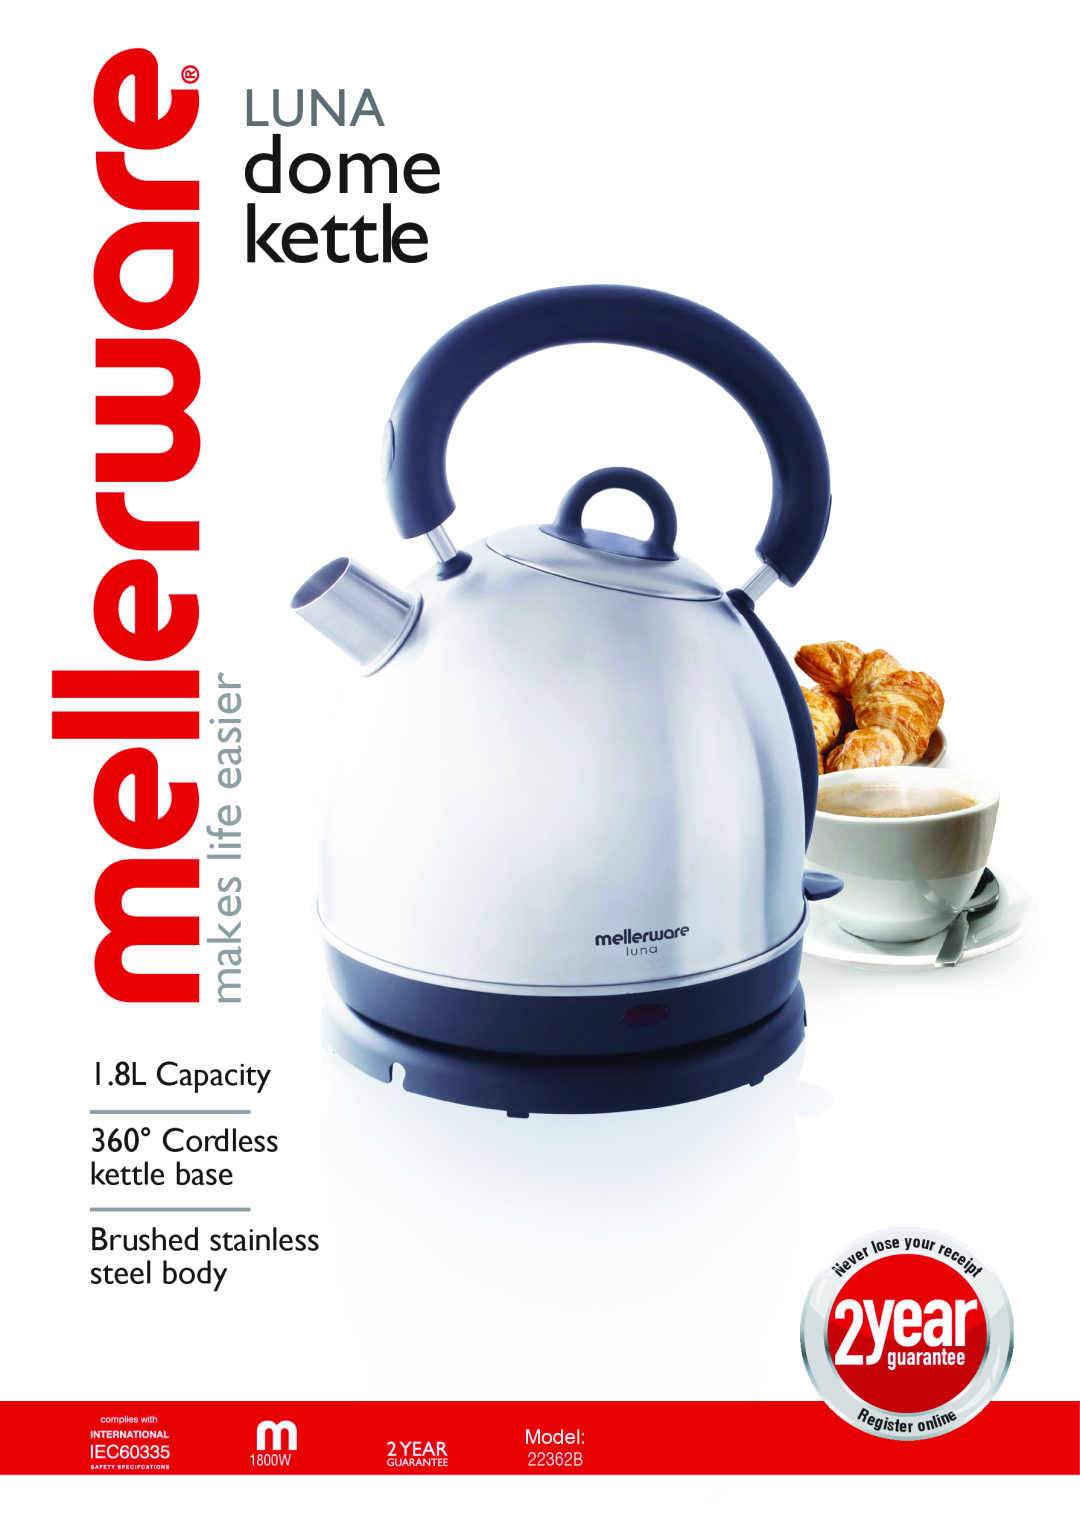 Mellerware 22362B manual dome kettle, Luna, makes life easier, Model, e yo, 1800W 